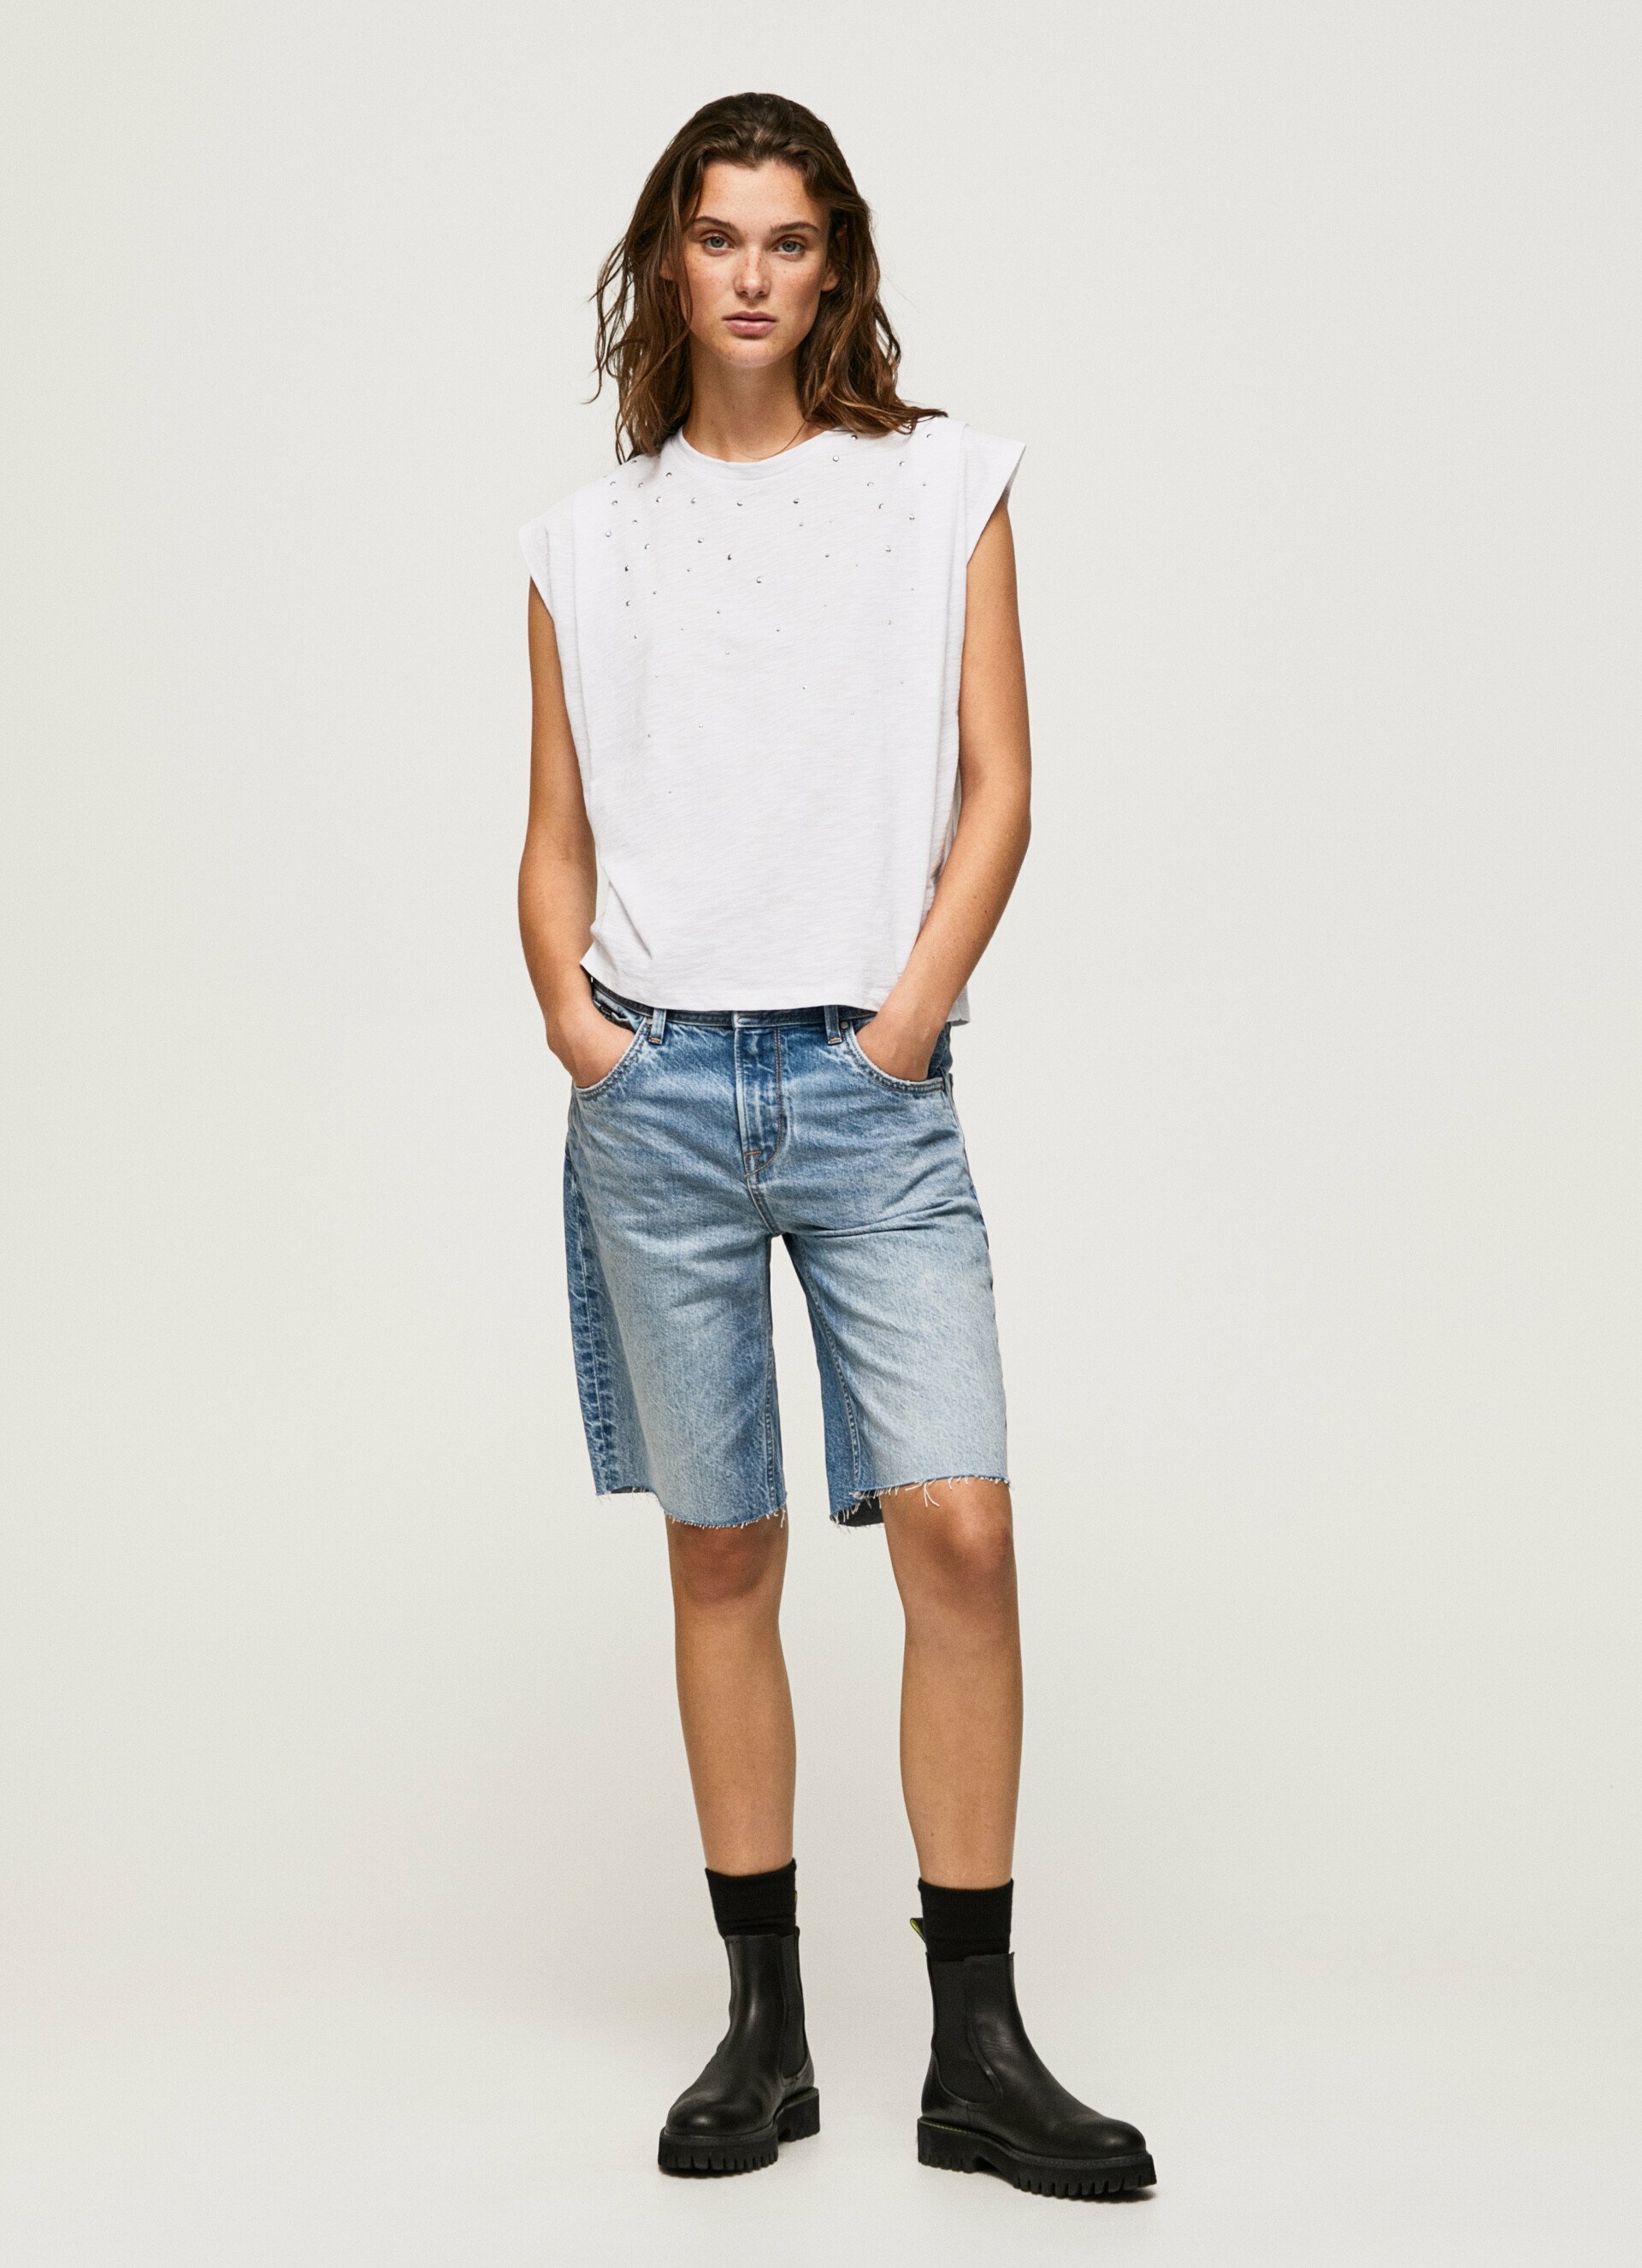 Pepe Jeans dámské bíle triko  MORGANA s cvoky - M (800)